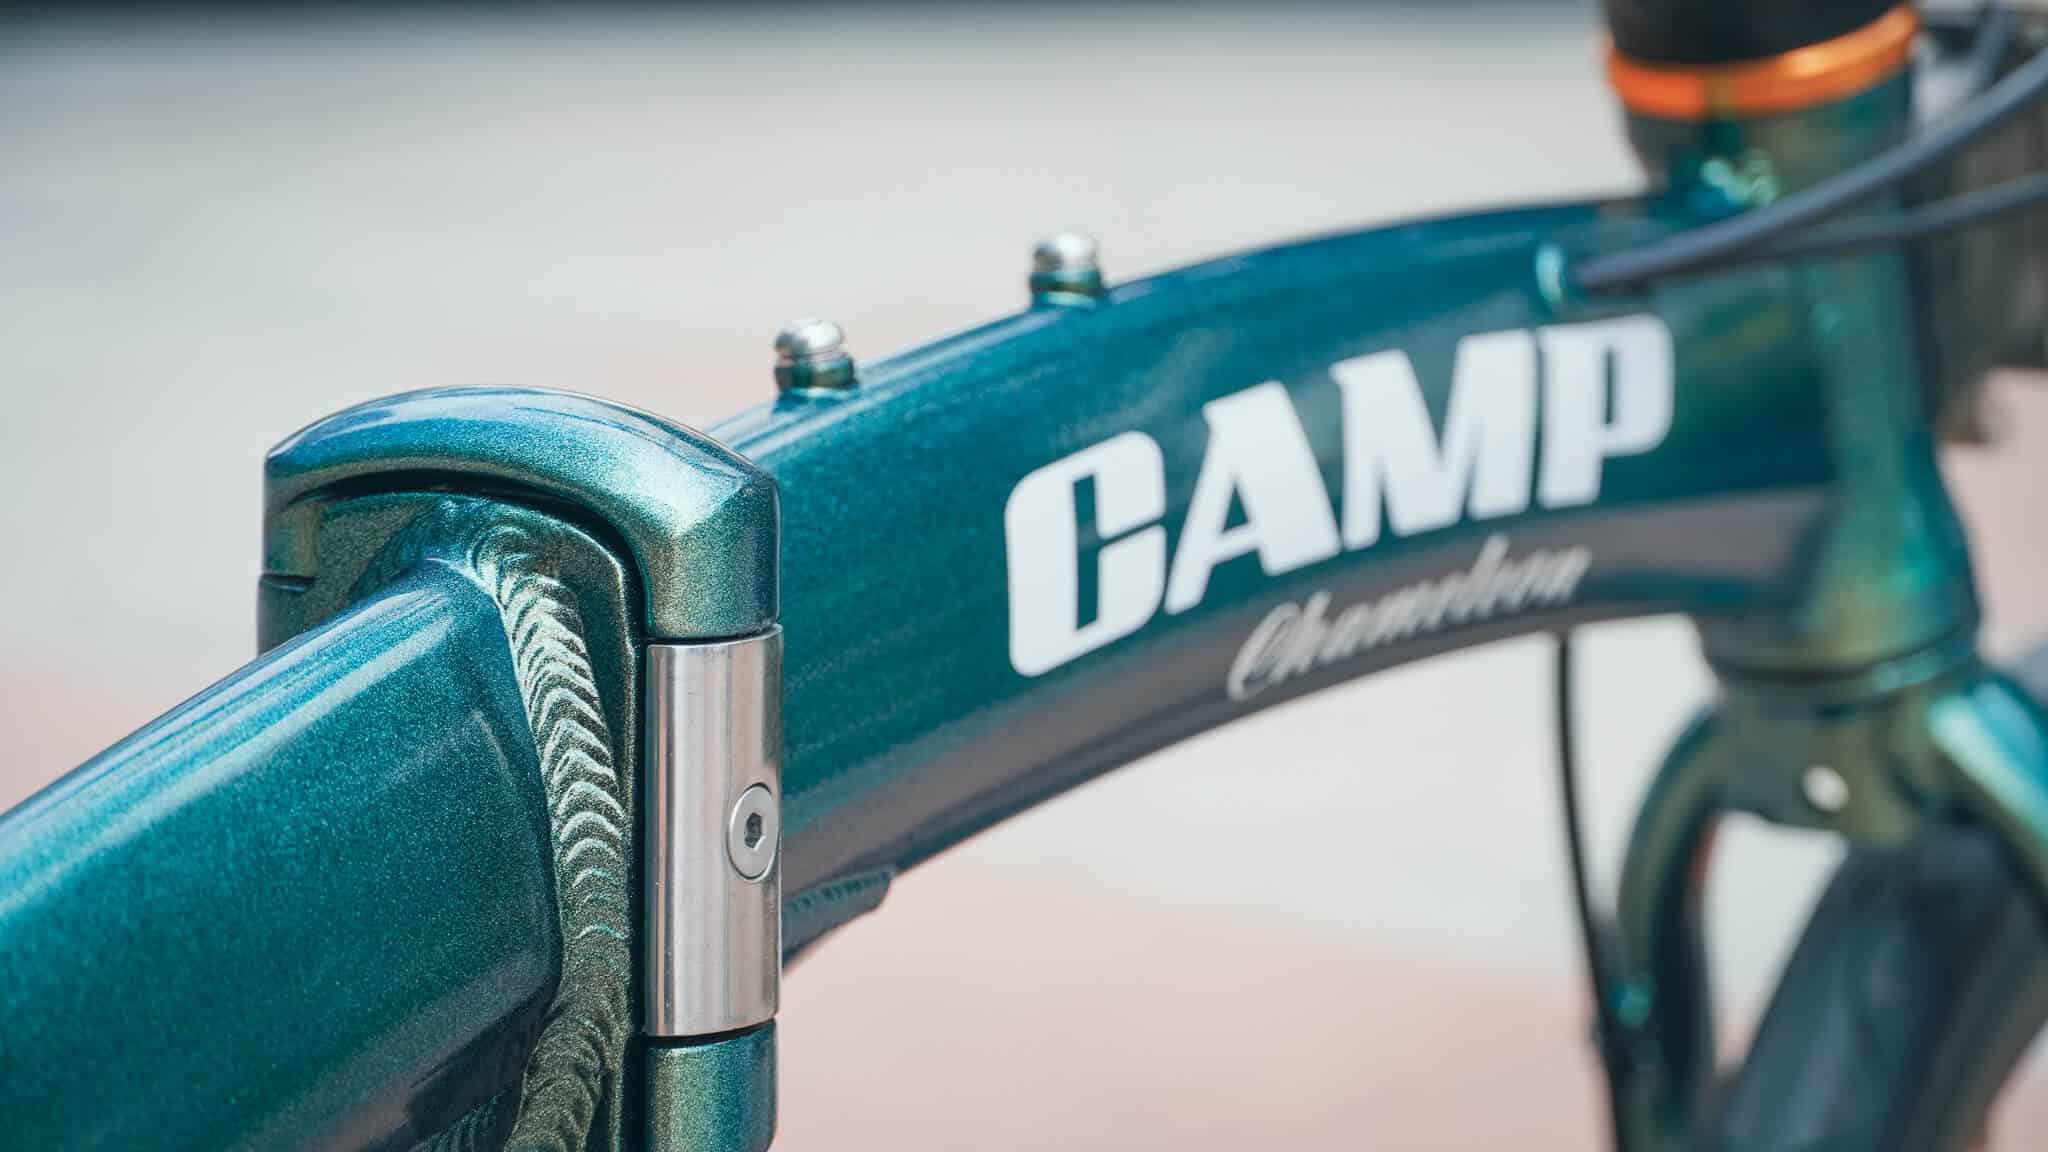 CAMP CHAMELEON (DIAMOND) foldable bicycle frame logo at Kallang